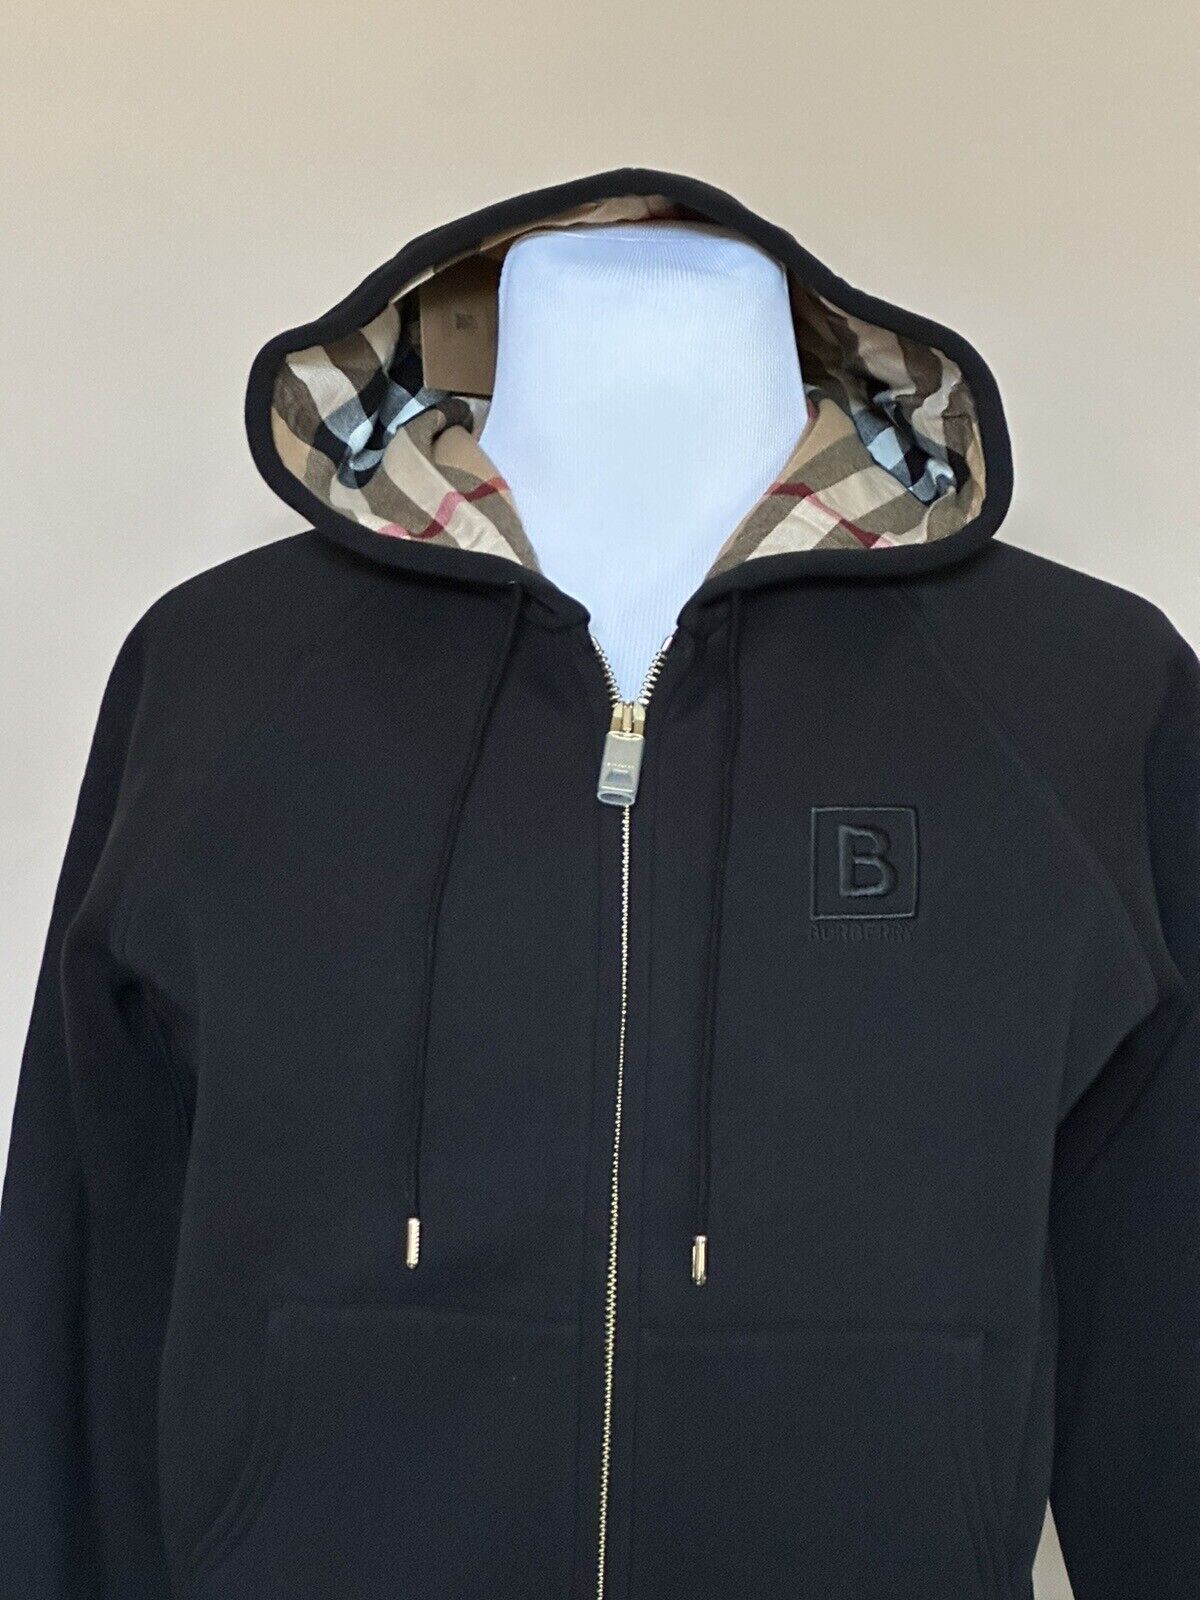 NWT $920 Burberry Check Women's Hoodie Cotton Zip Up Jacket Black XL 8061554